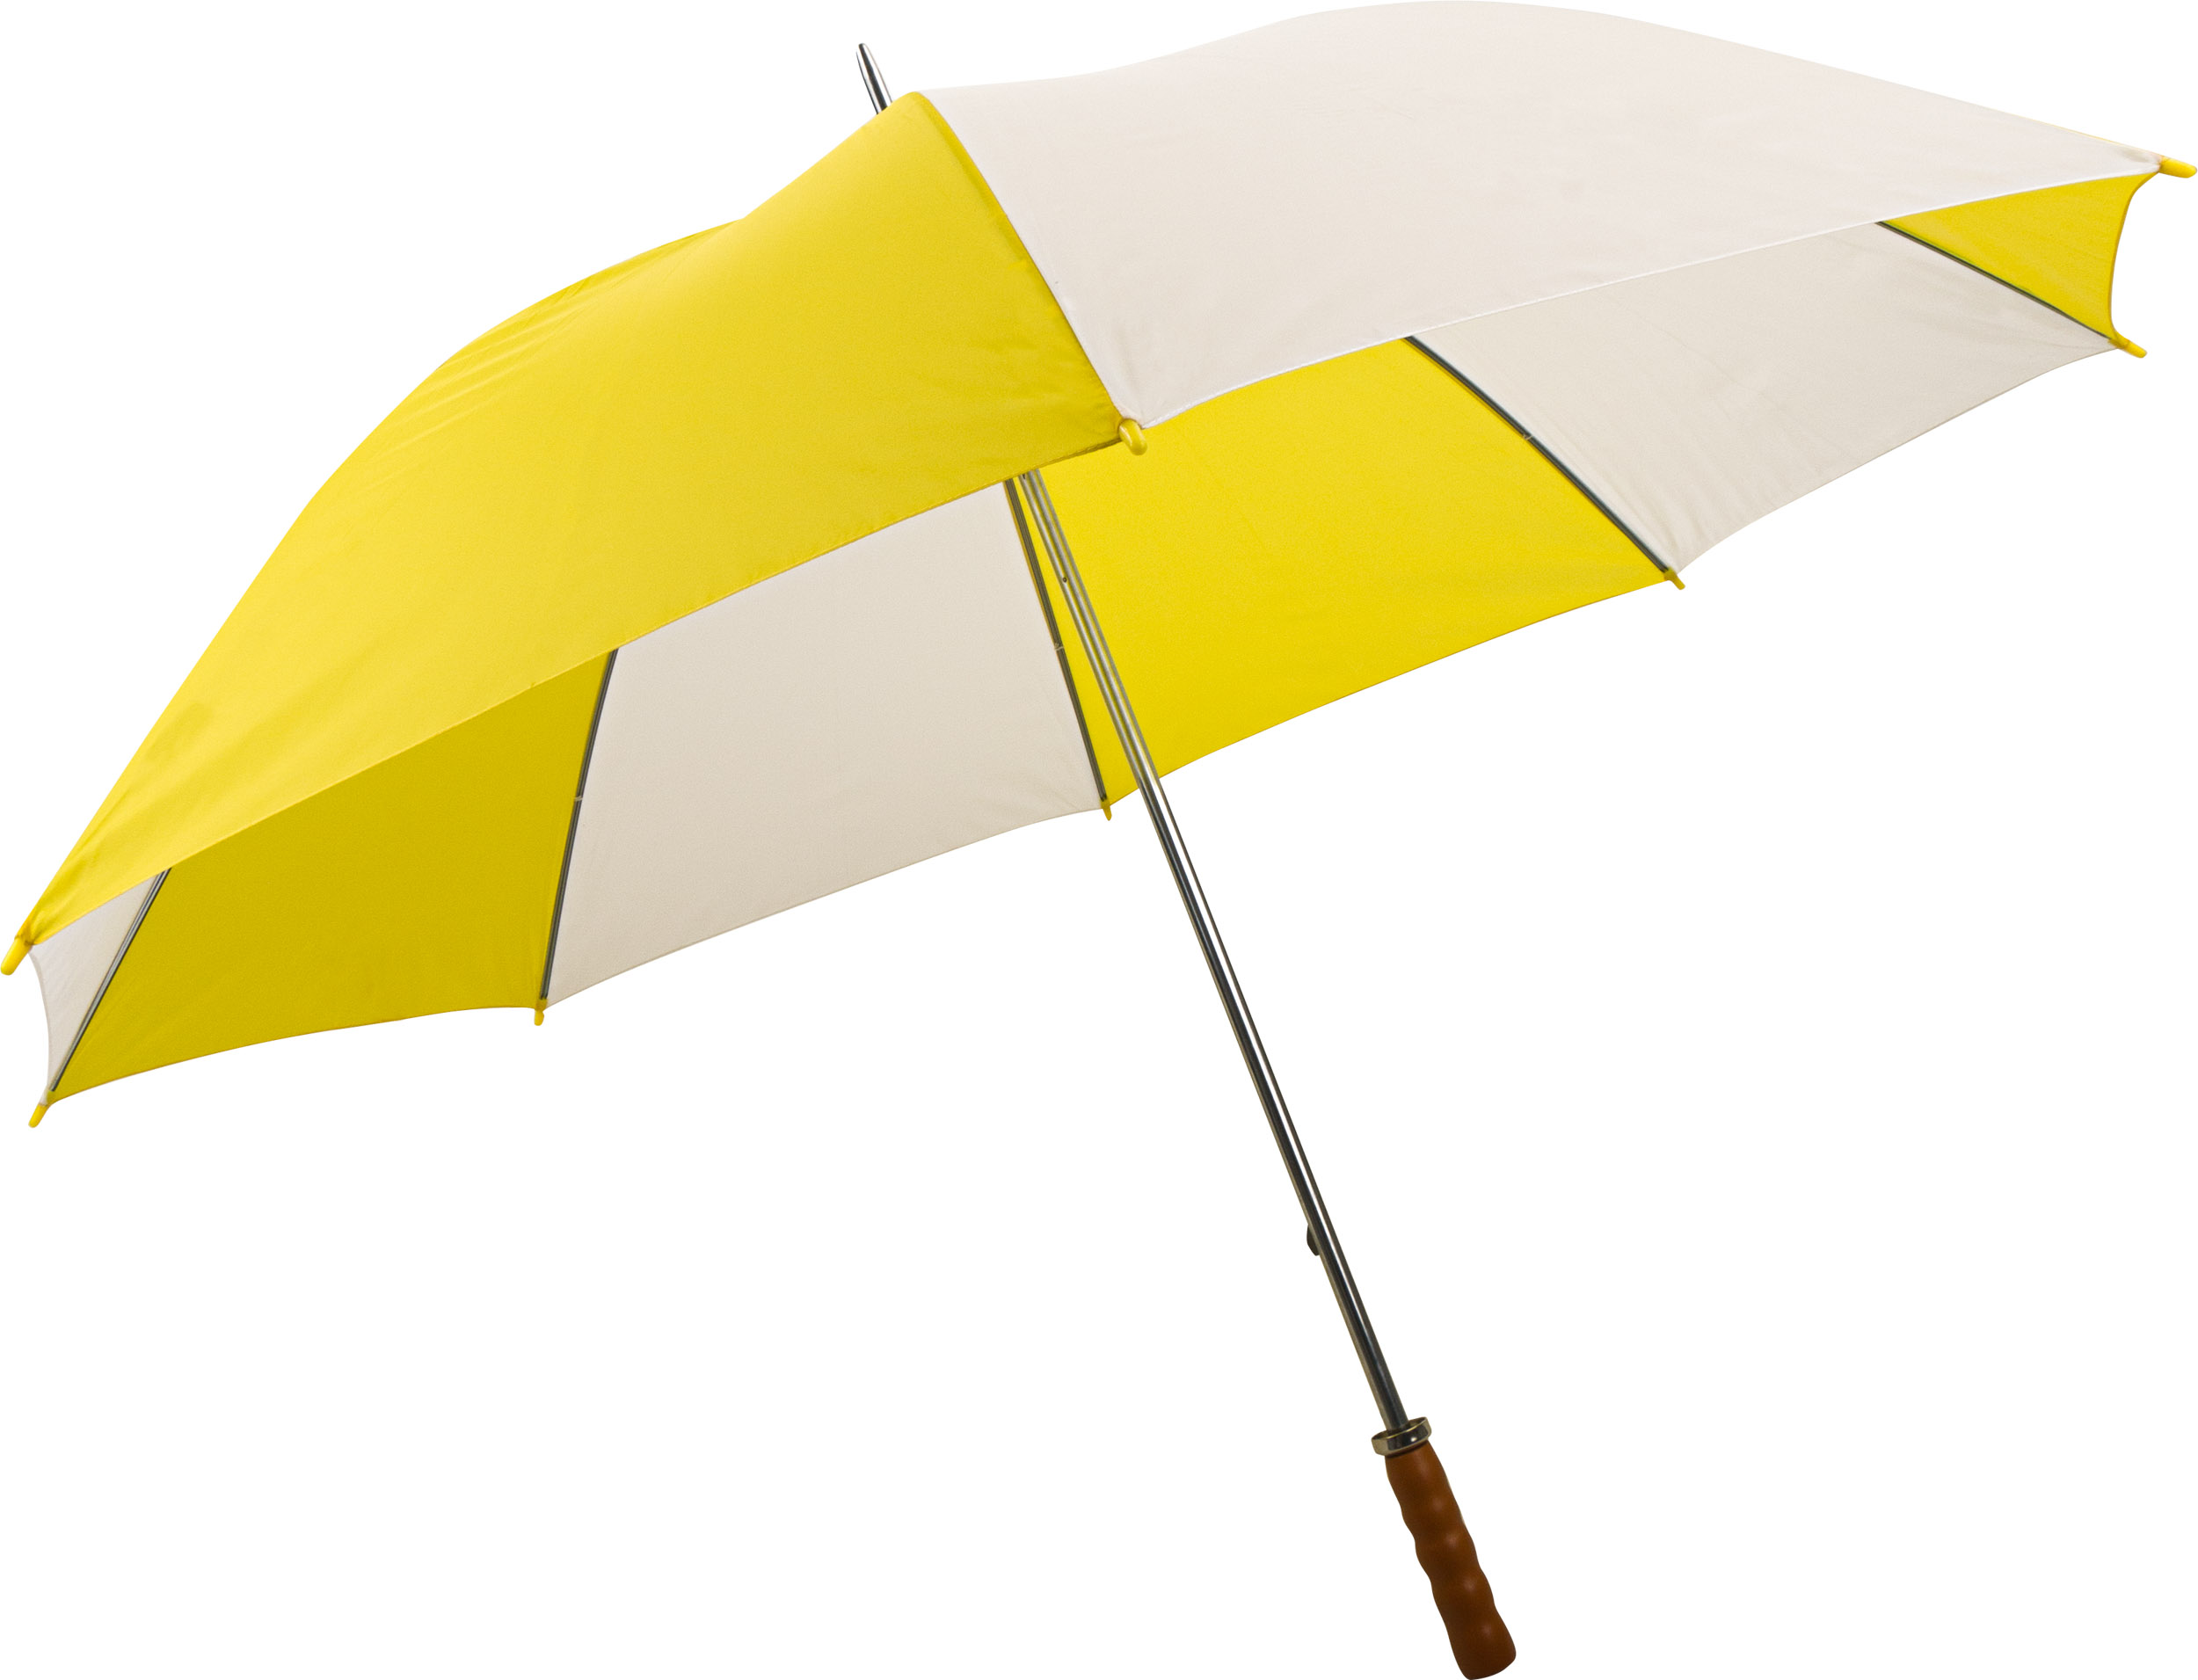 Deštník Impliva Umbrella Yellow-White